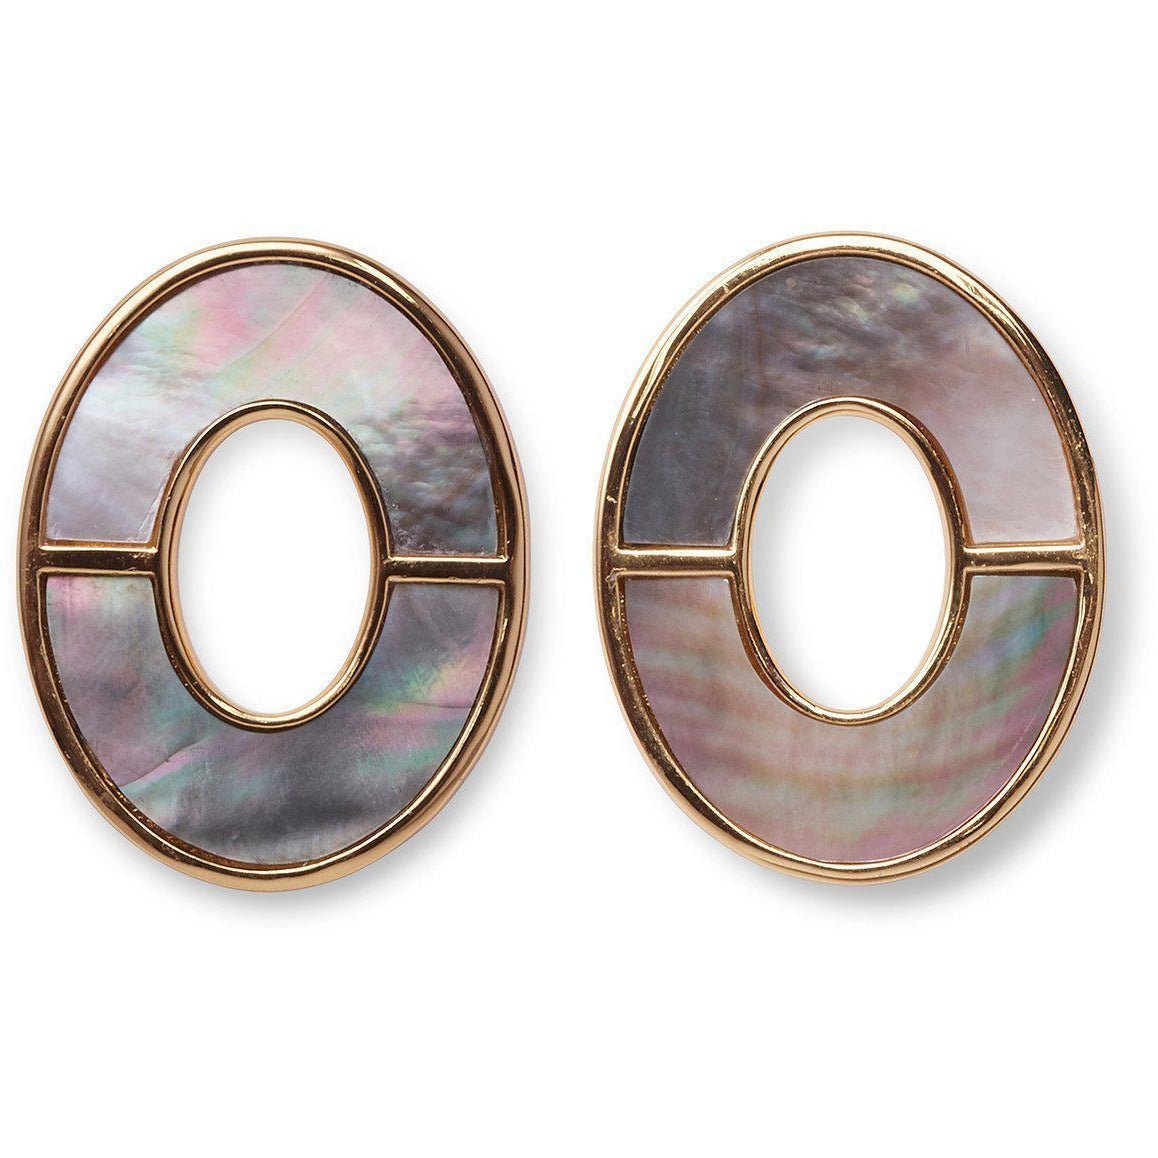 Symmetry Earrings in Iridescent - shop-olivia.com